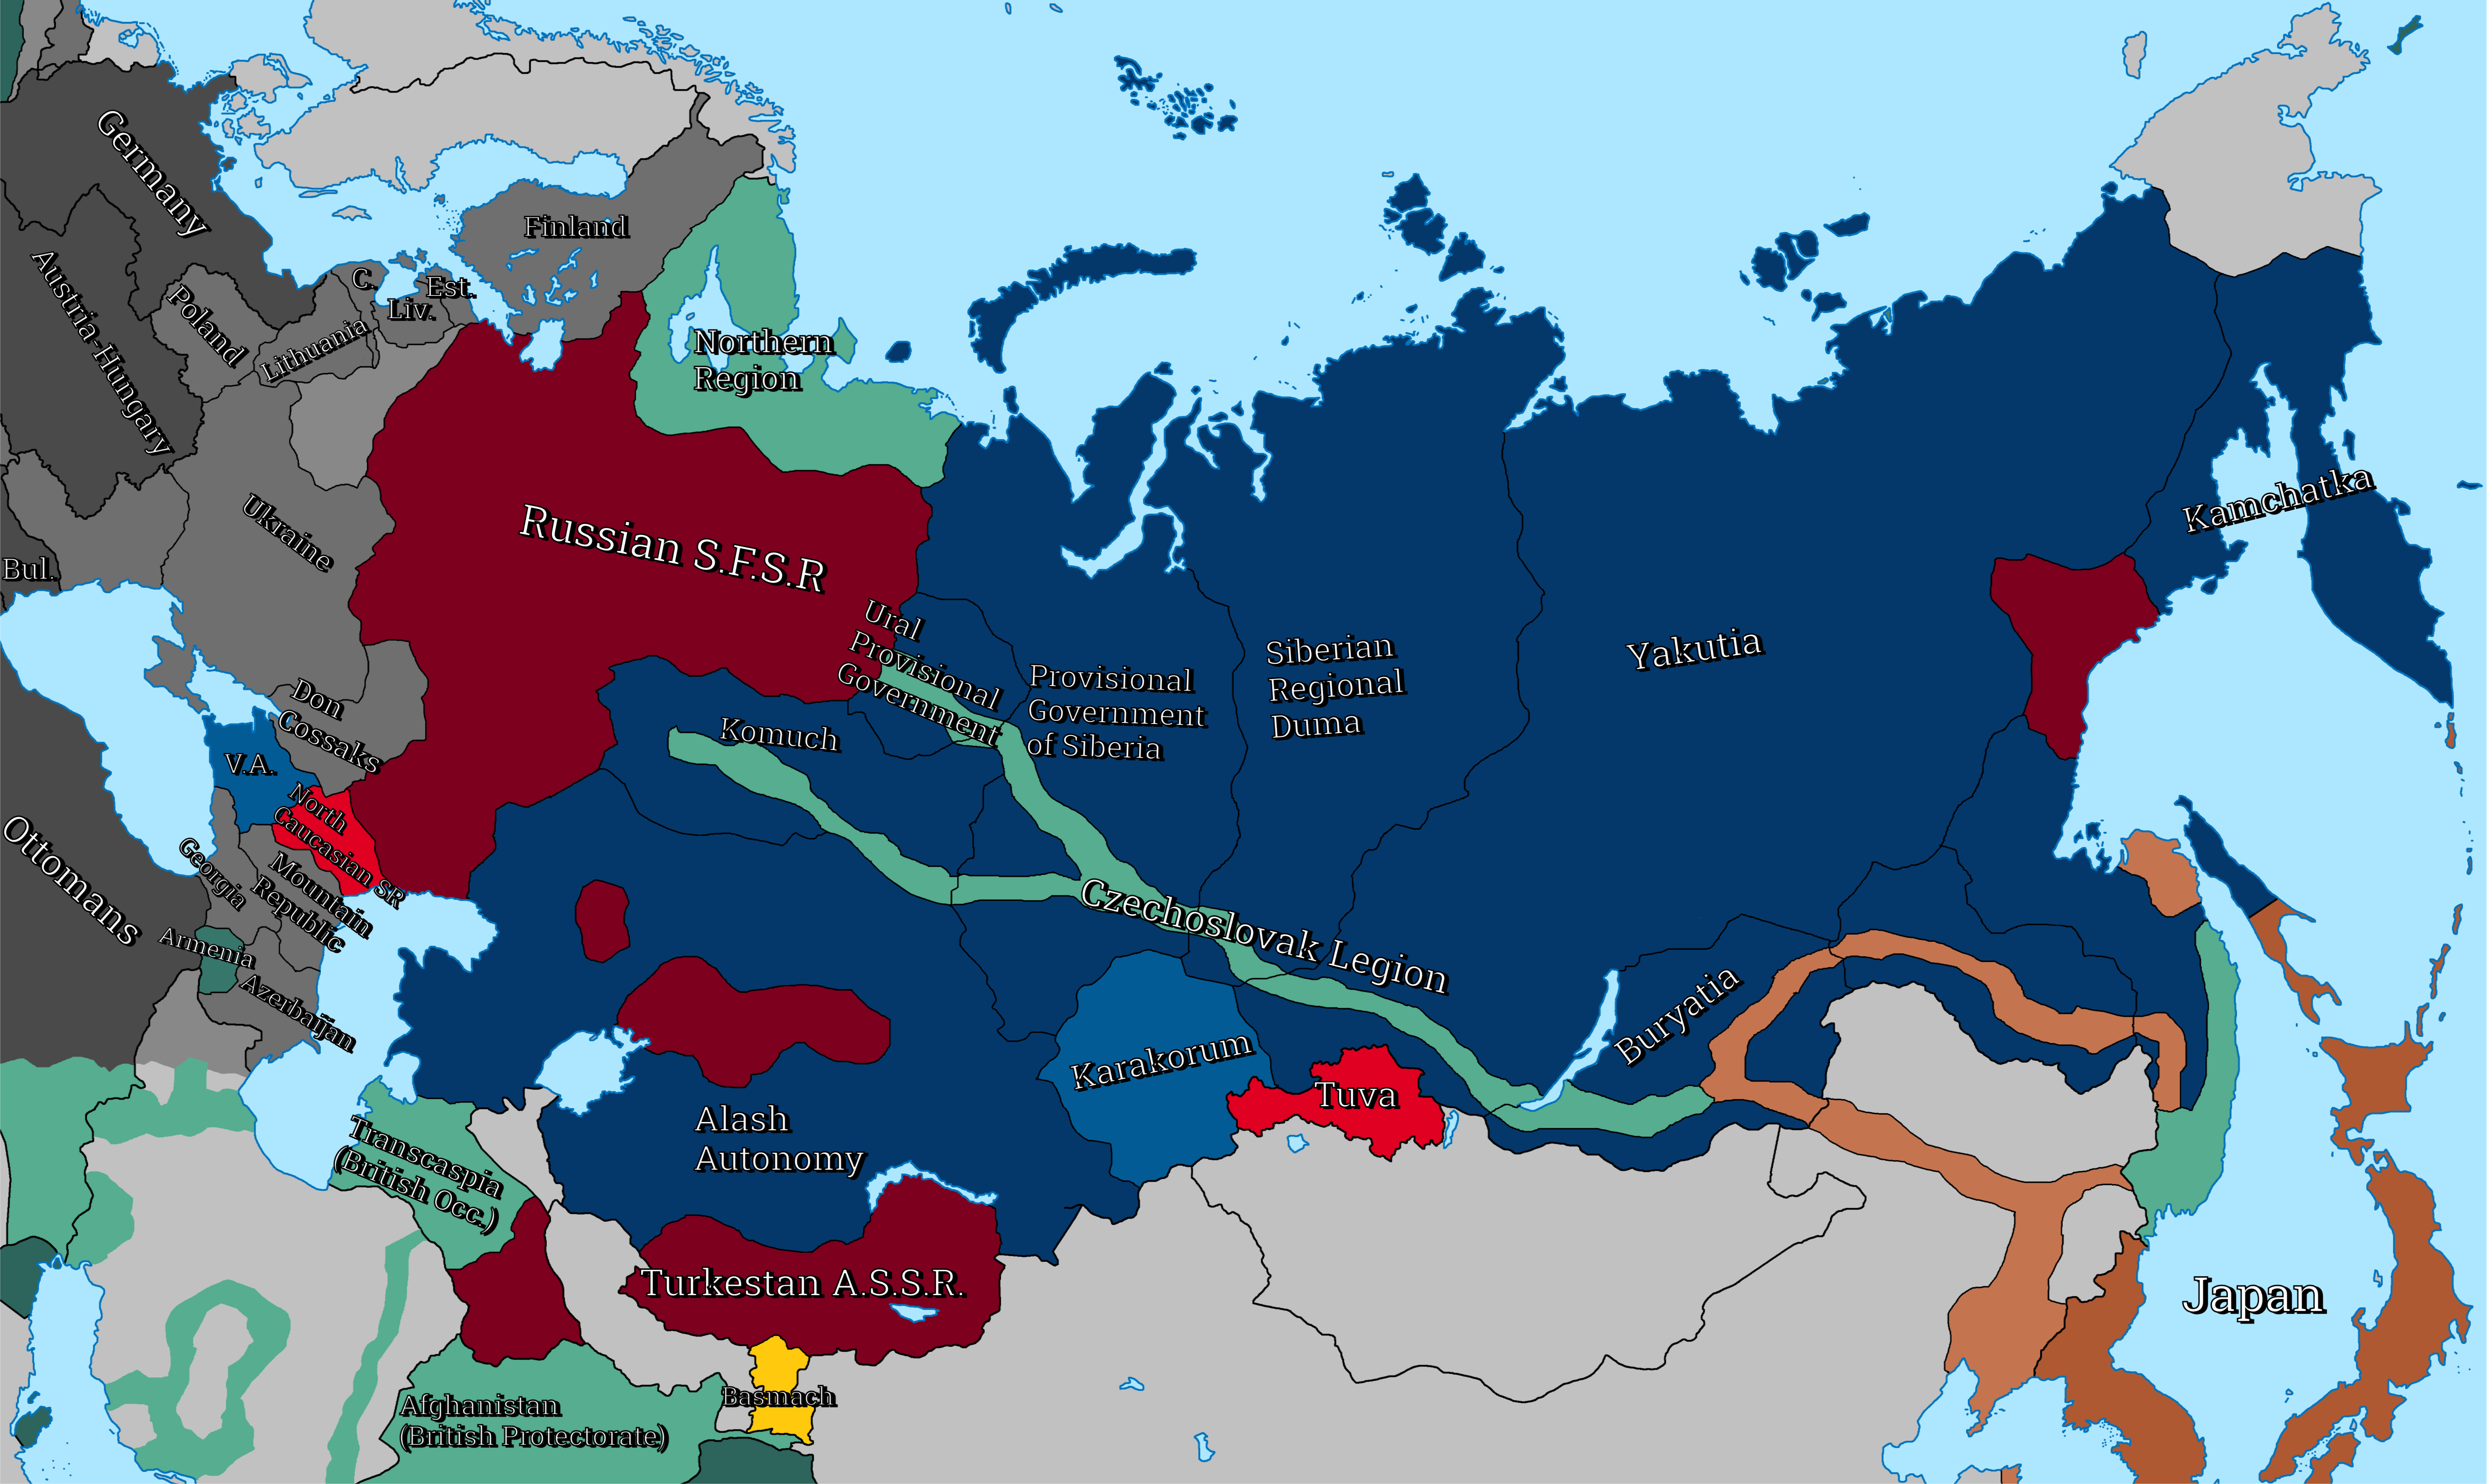 Soviet empire - Wikipedia